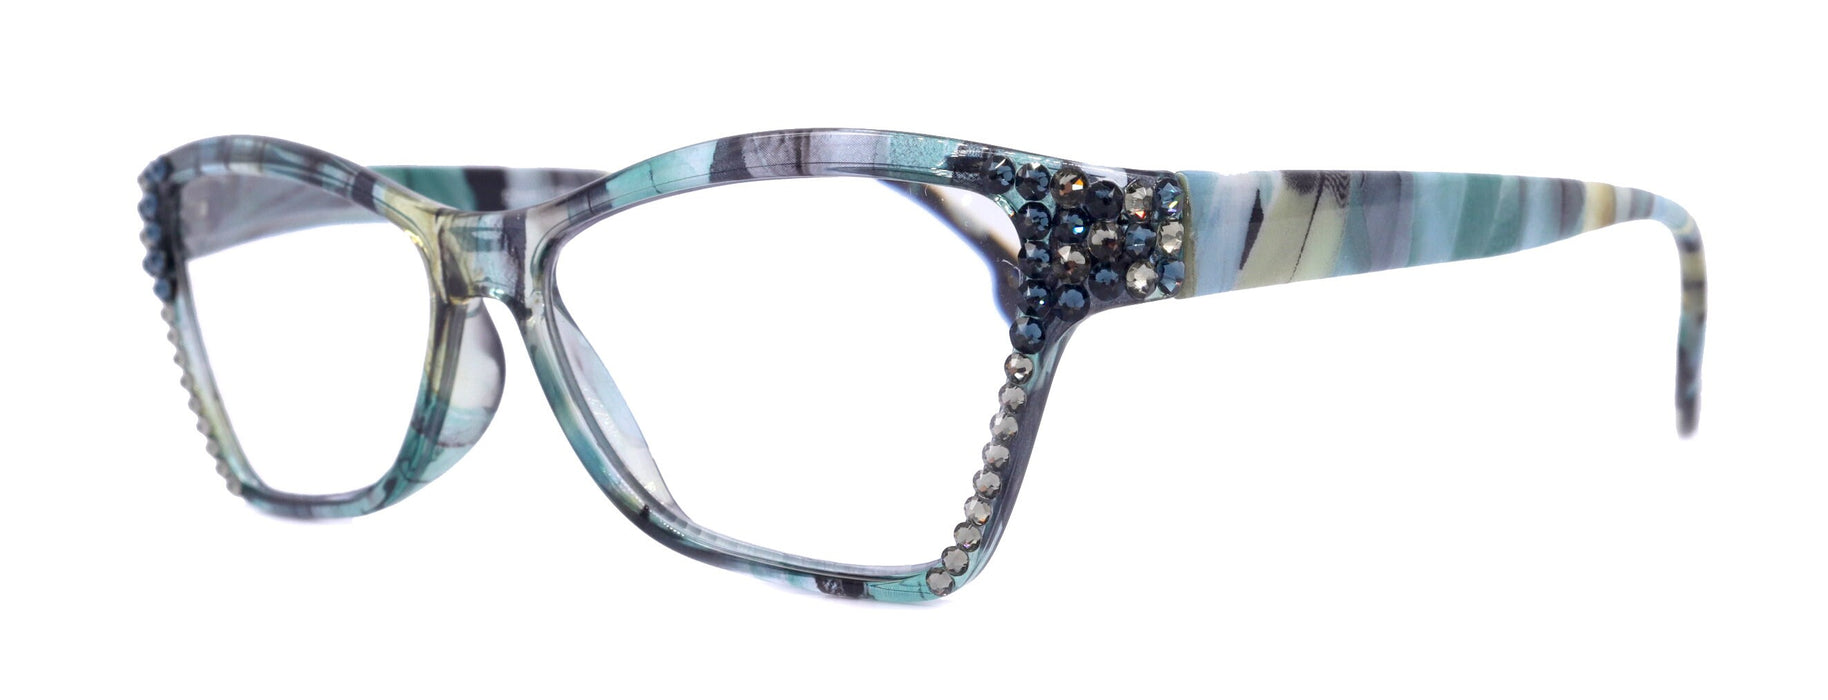 Avian, (Bling) Women Reading Glasses w (Montana, Black Diamond) Genuine European Crystals, Magnifying Cat Eye (Teal Blue) NY Fifth Avenue